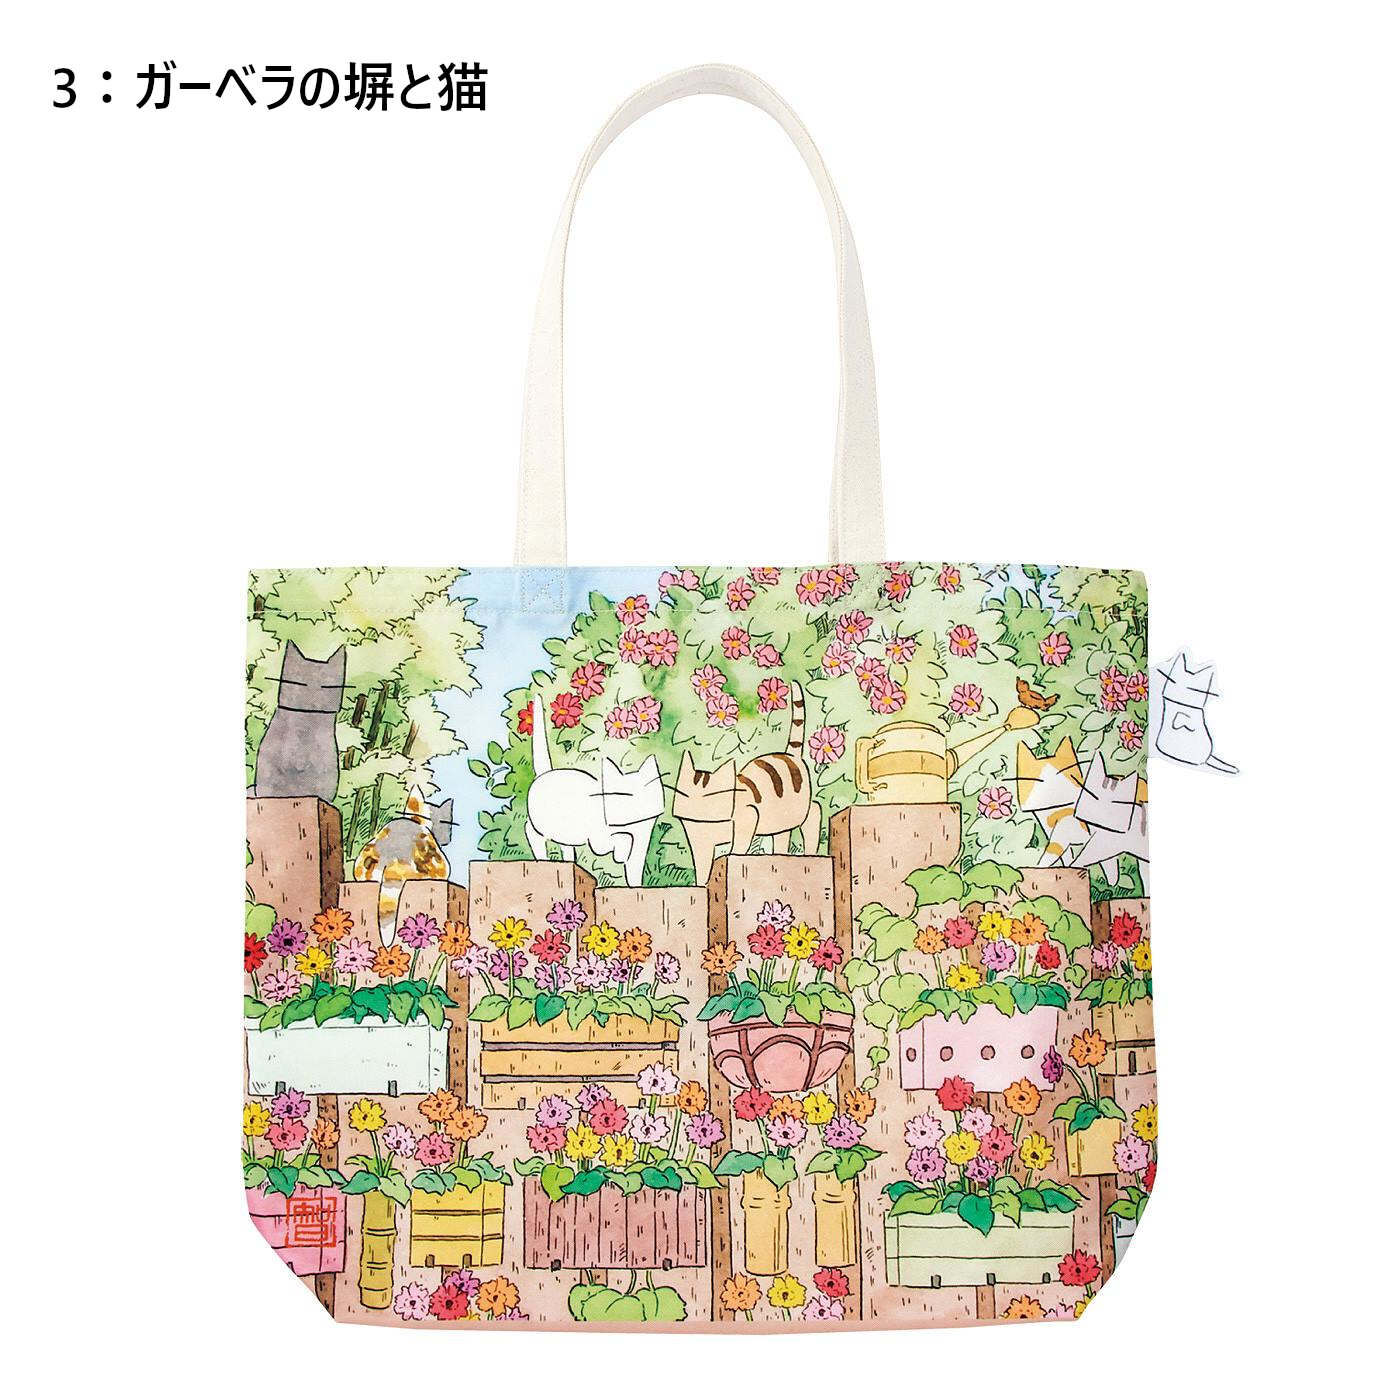 Real Stock|日本画家 久保智昭さんとつくった　猫とお花の季節のトートバッグ|〈ガーベラの塀と猫〉